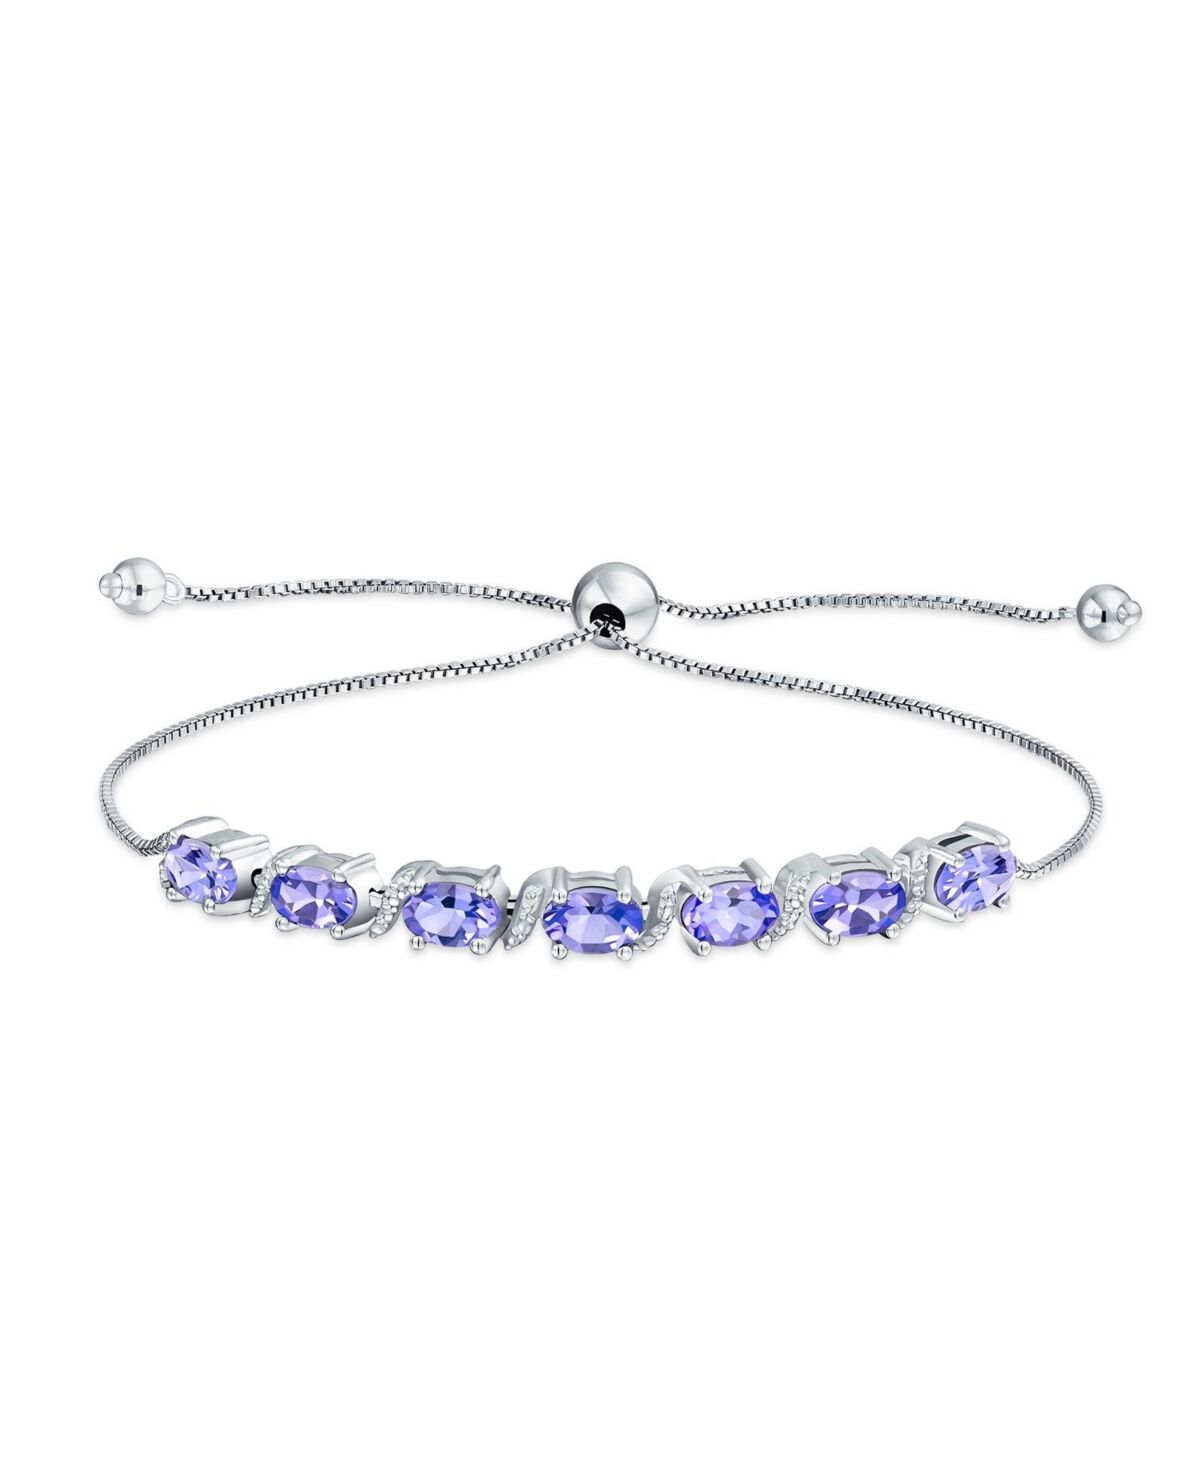 Bling Jewelry Natural 9.25 Ctw Gemstones Zircon Accent Lavender Purple Tanzanite Bolo Tennis Bracelet for Women Adjustable 7-8 Inch .925 Sterling Silver - Lavender